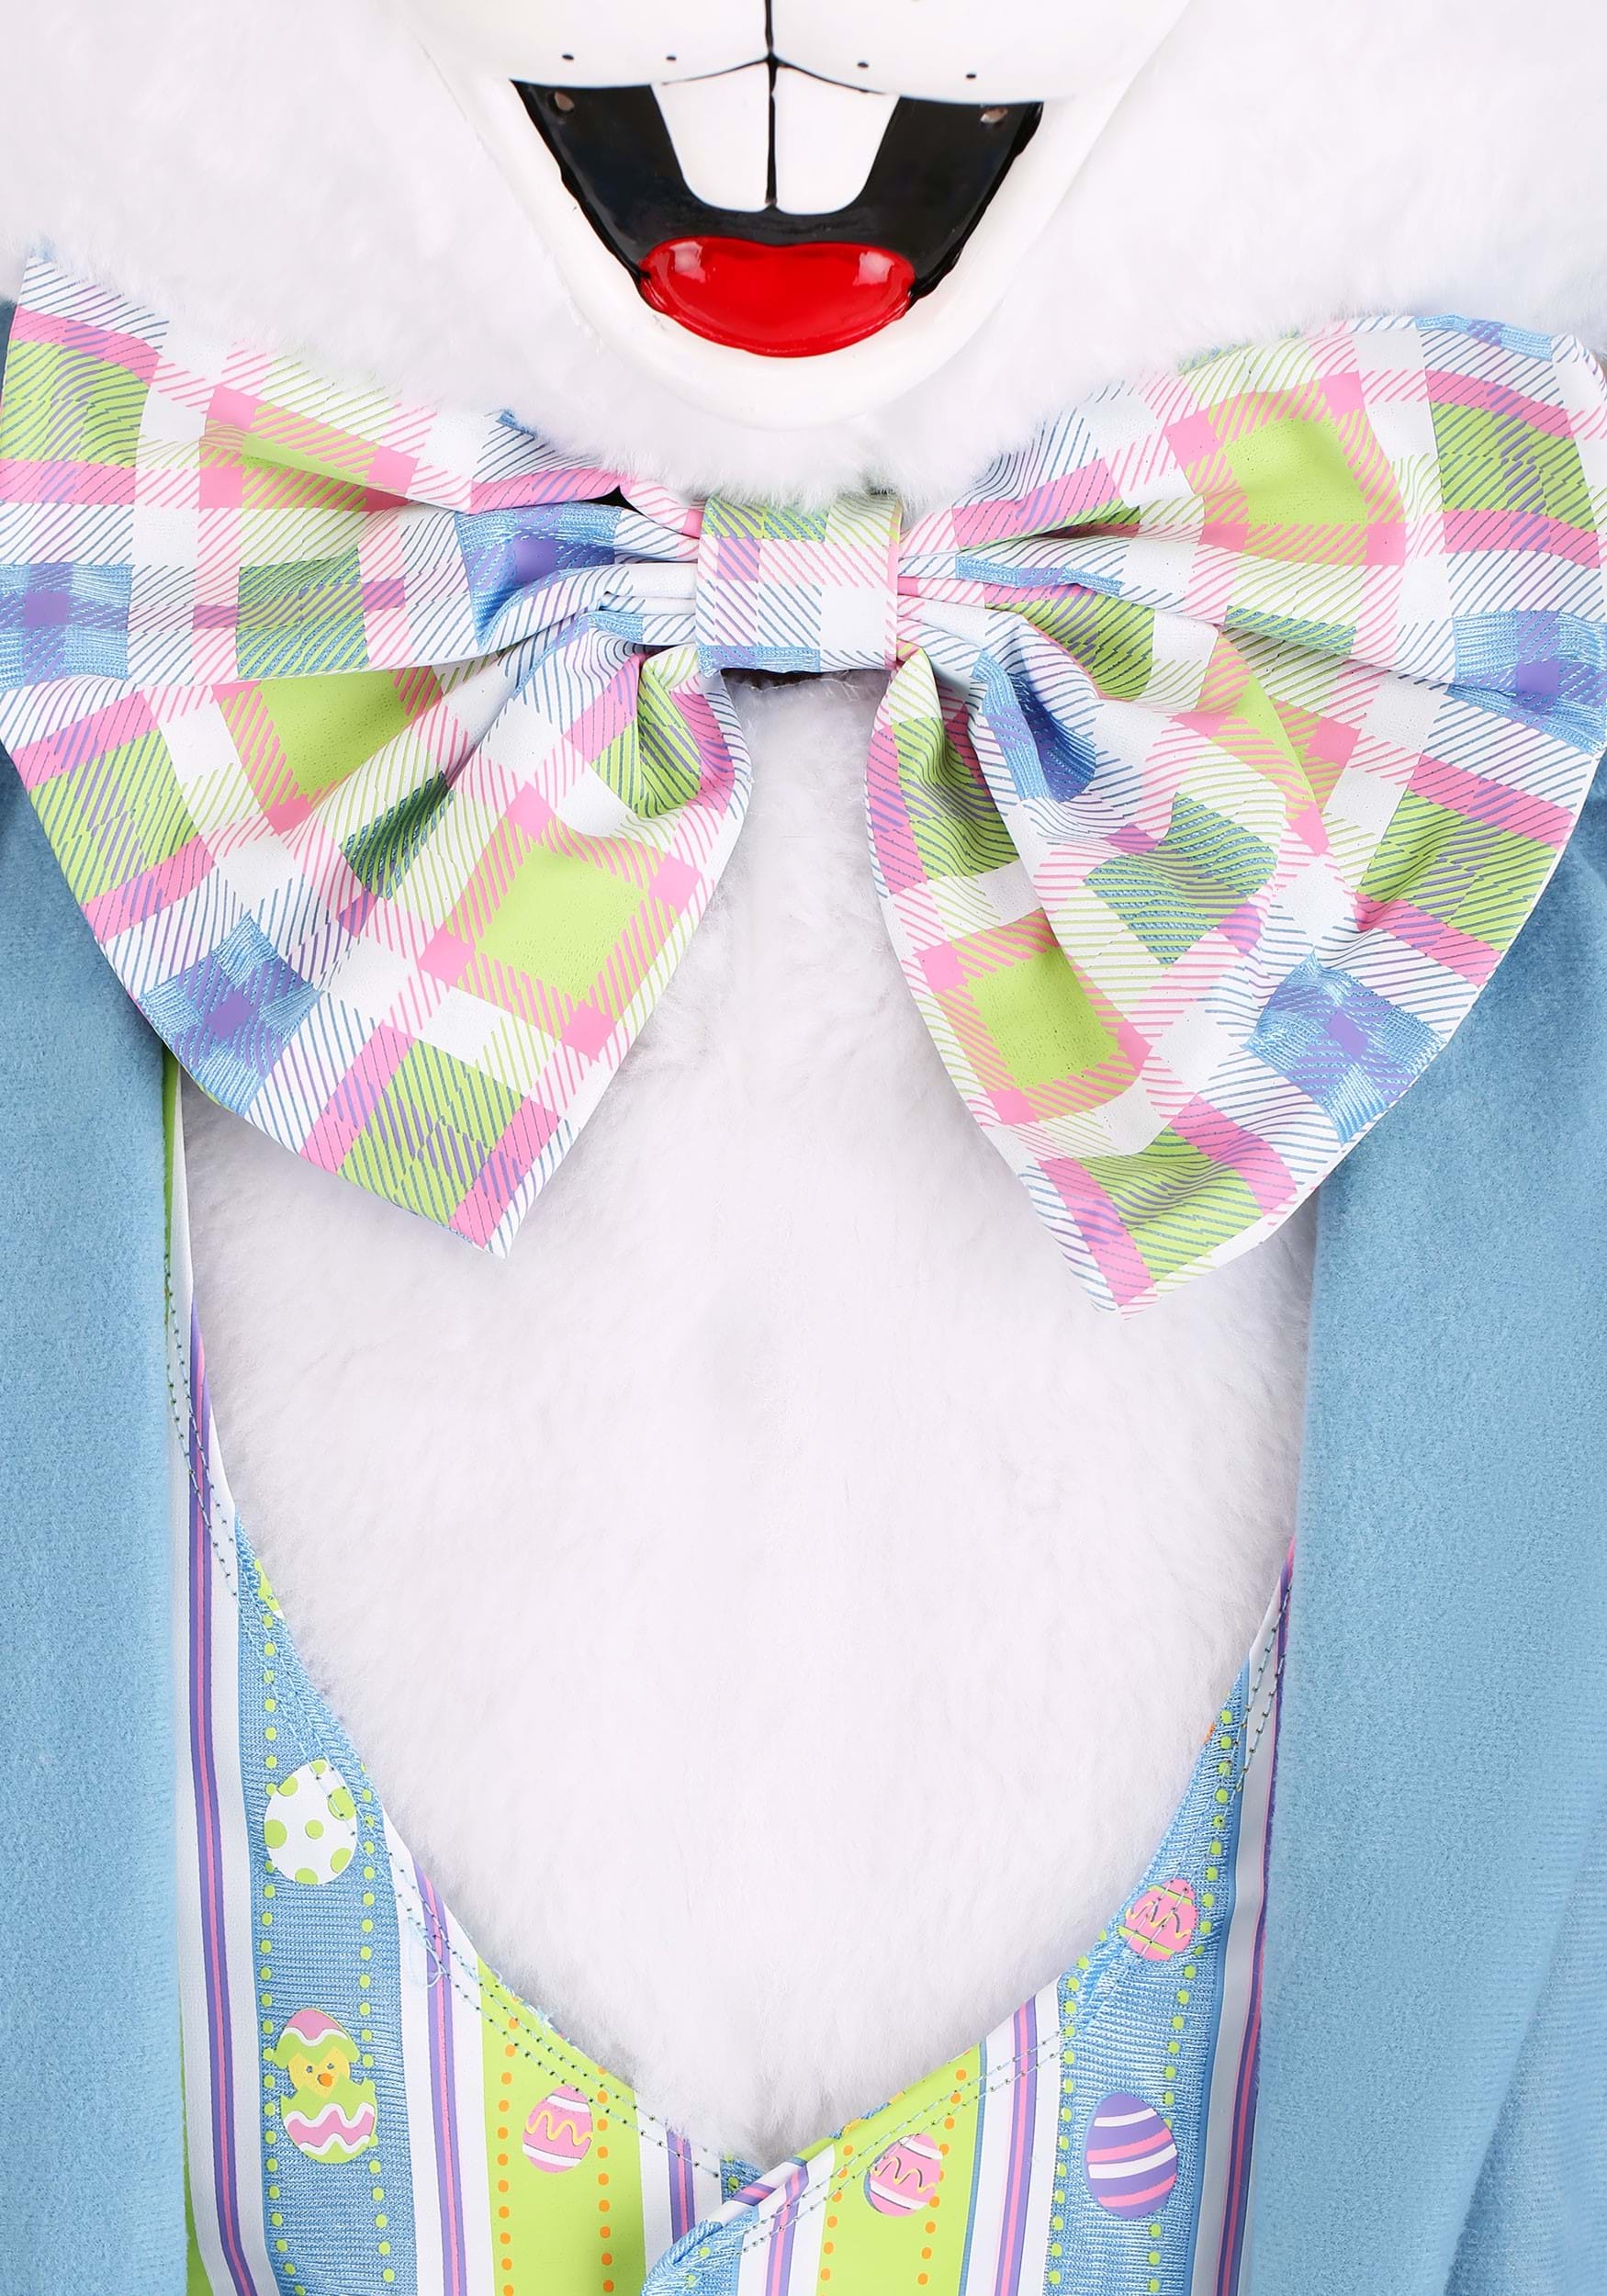 Deluxe Easter Bunny Fancy Dress Costume